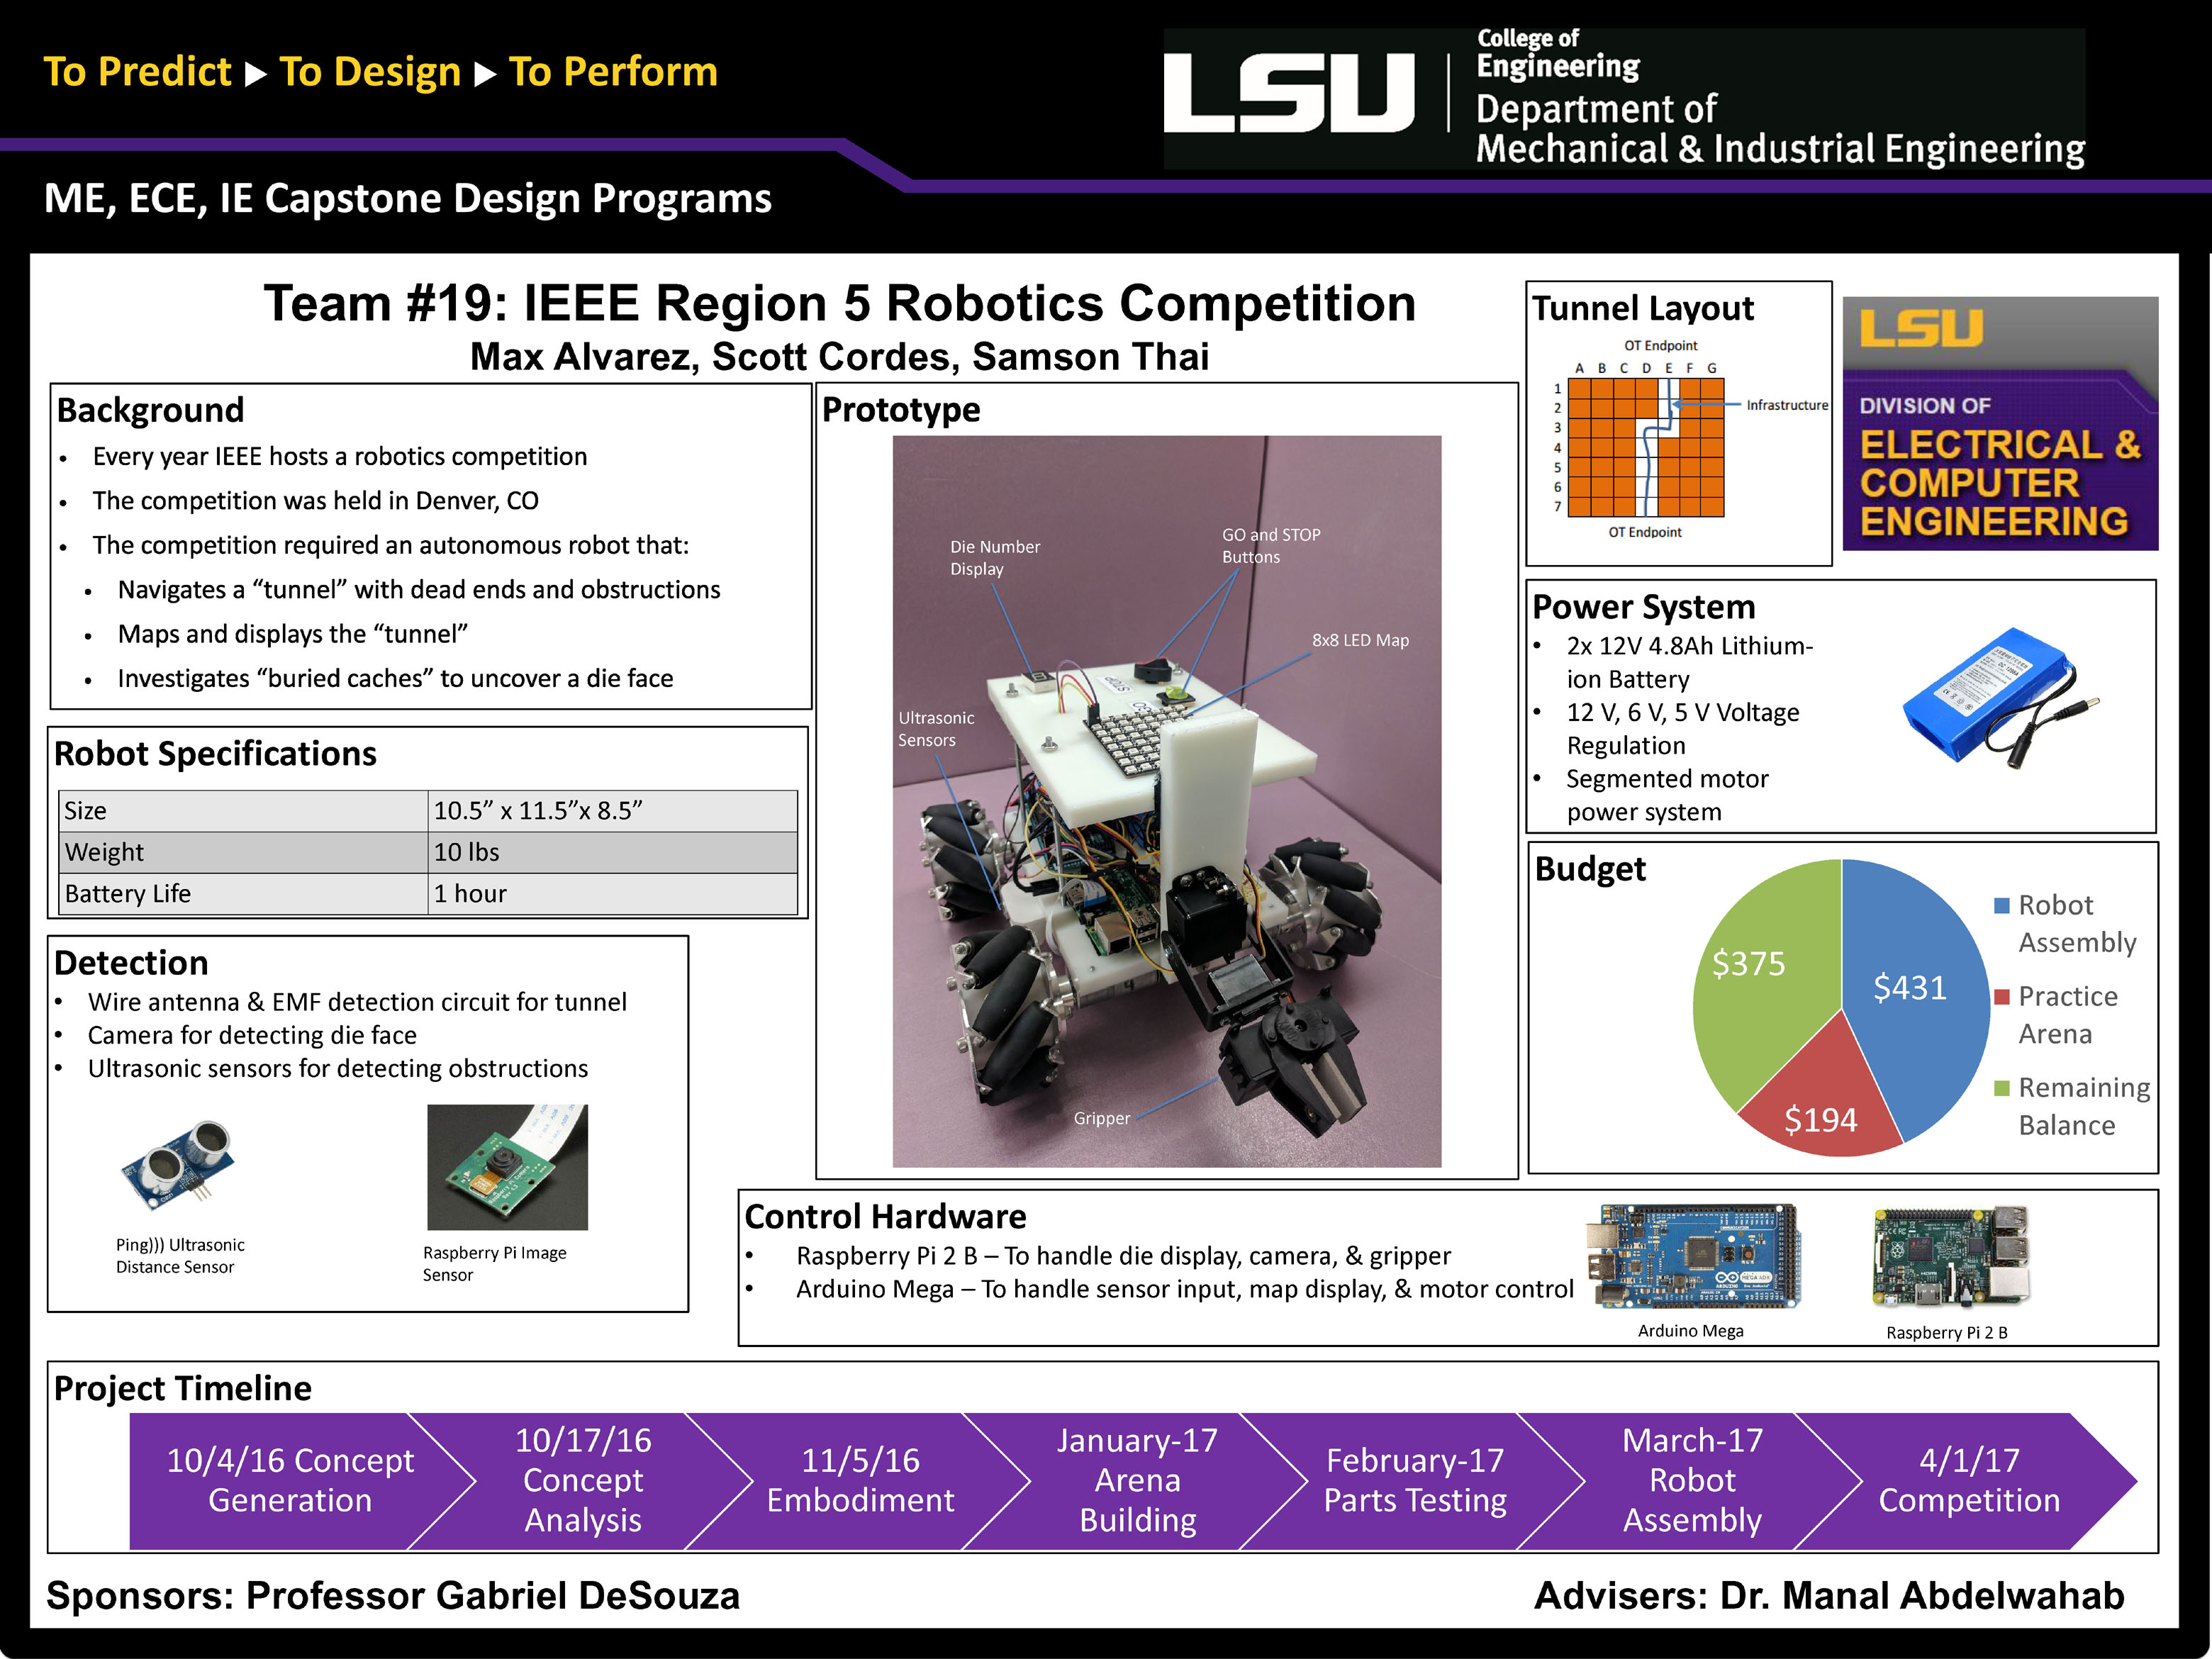 Project 19: IEEE R5 Robot 2017